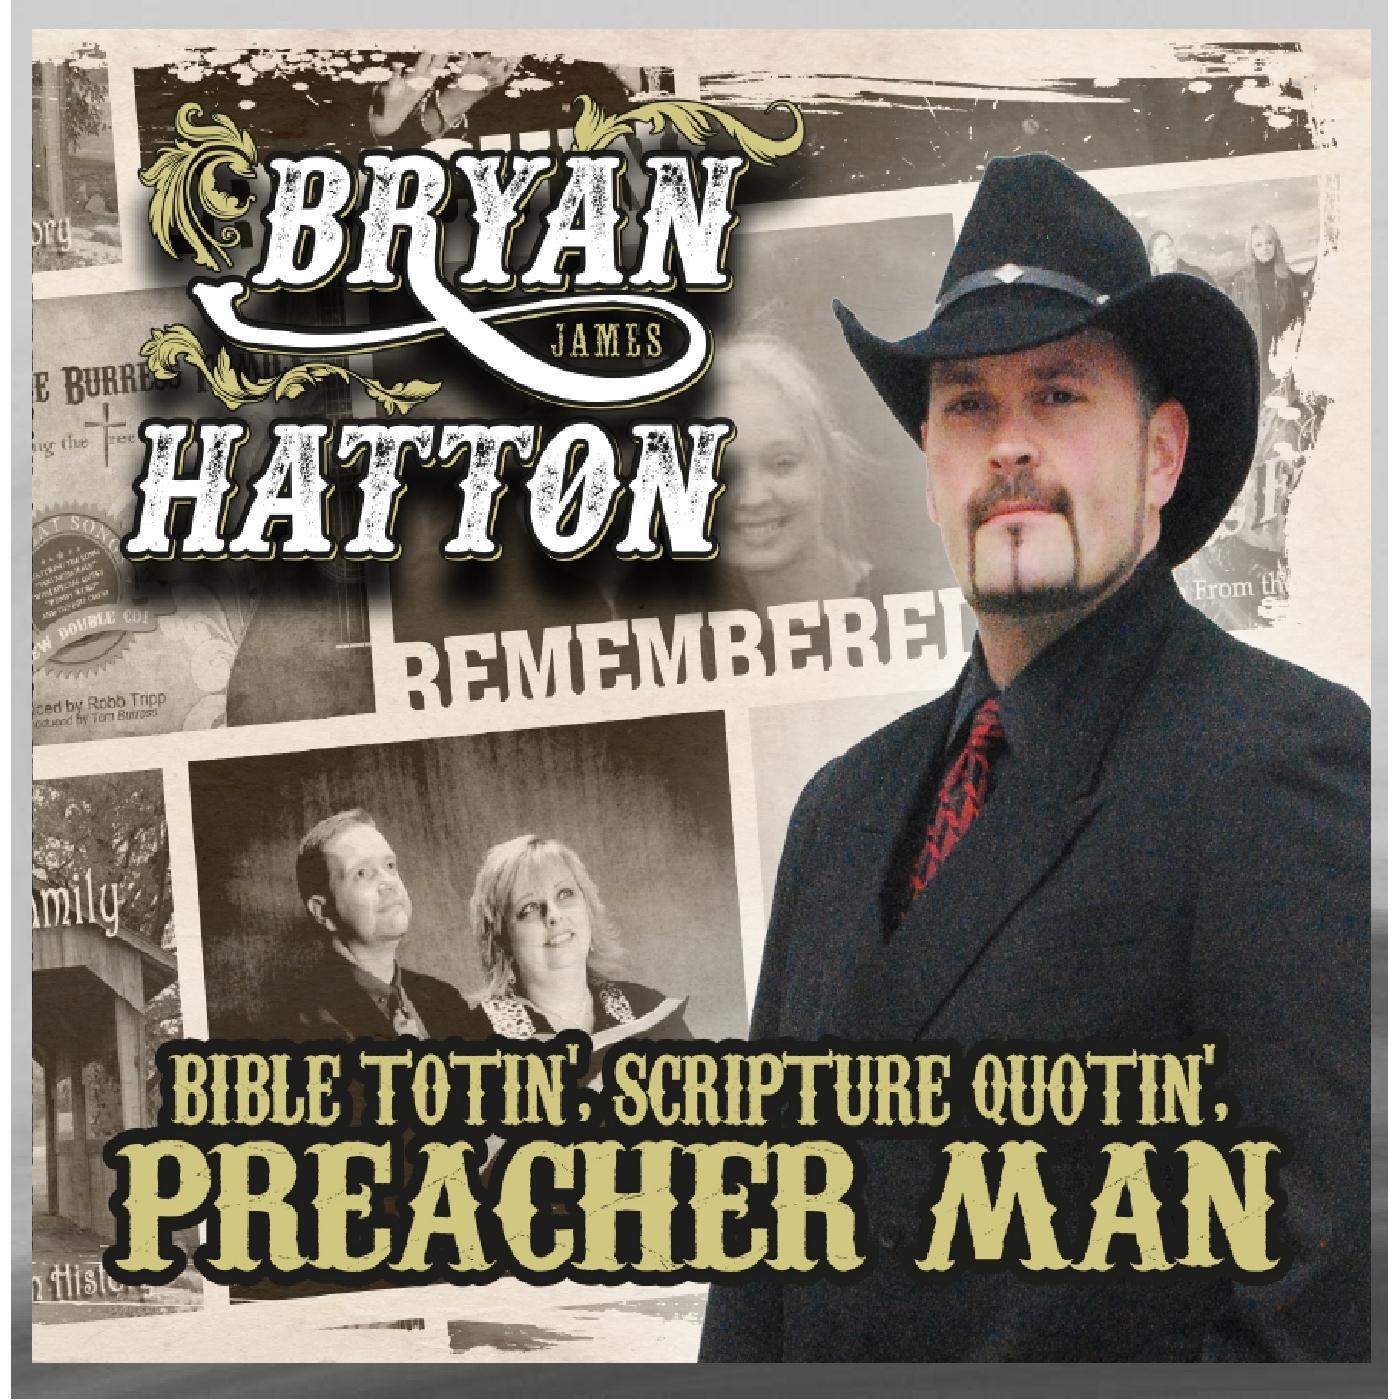 Bible Totin', Scripture Quotin' Preacher Man